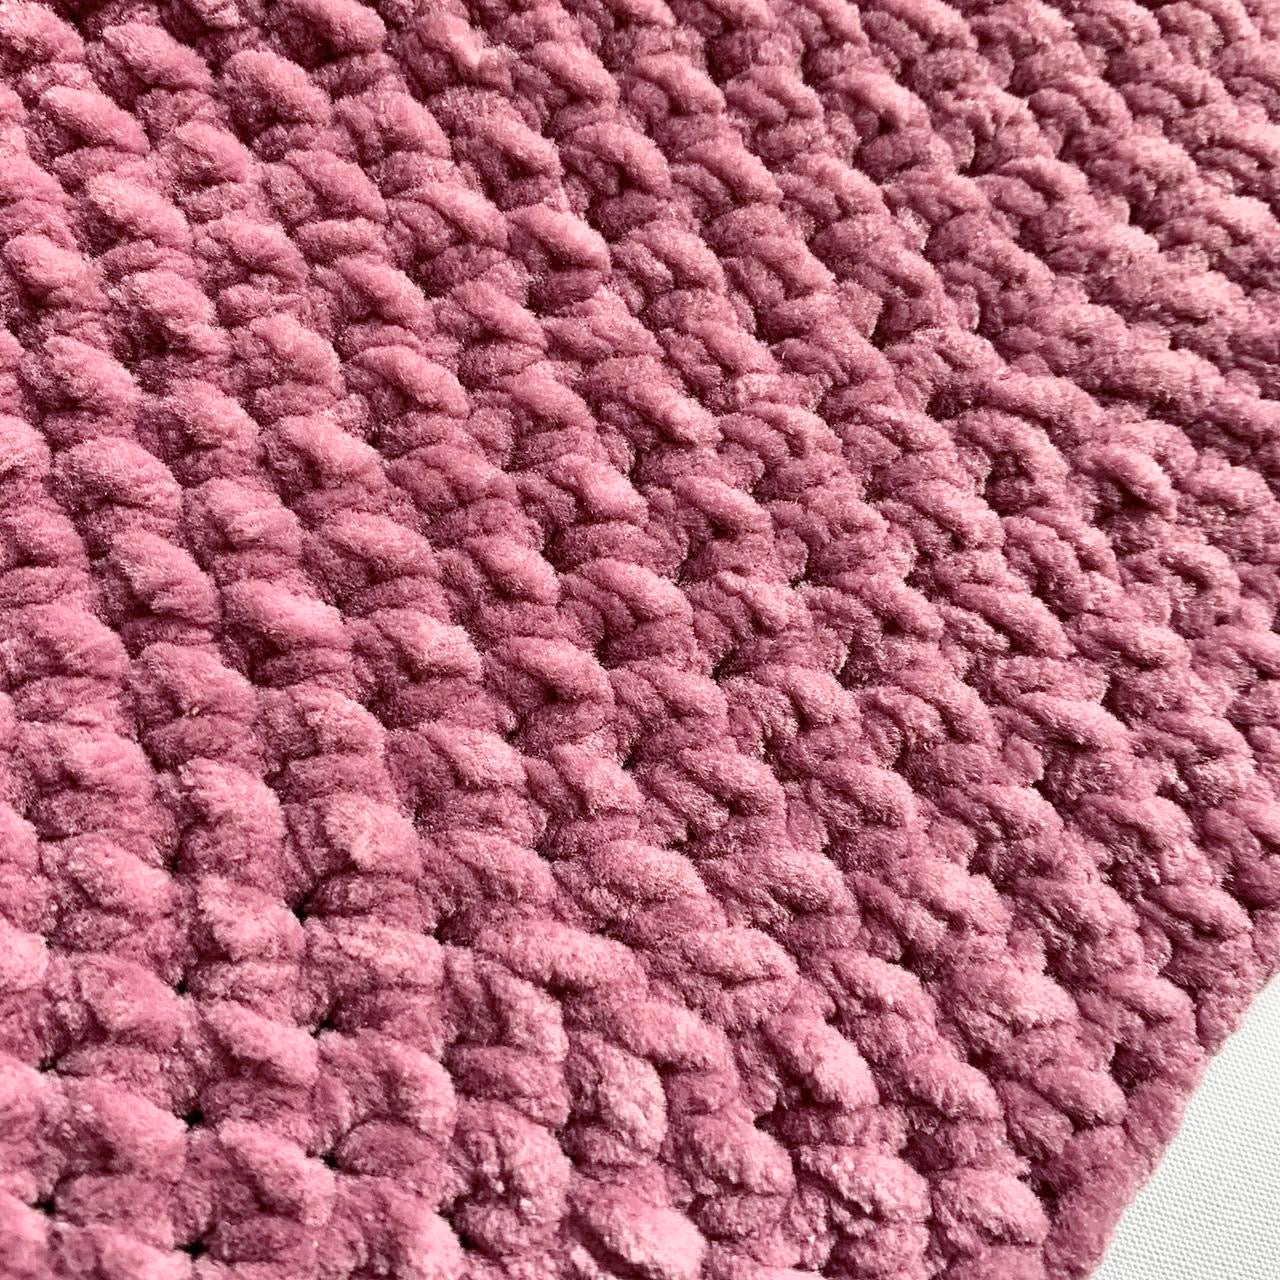 Handmade crushed velvet crochet bucket hat in dark pink